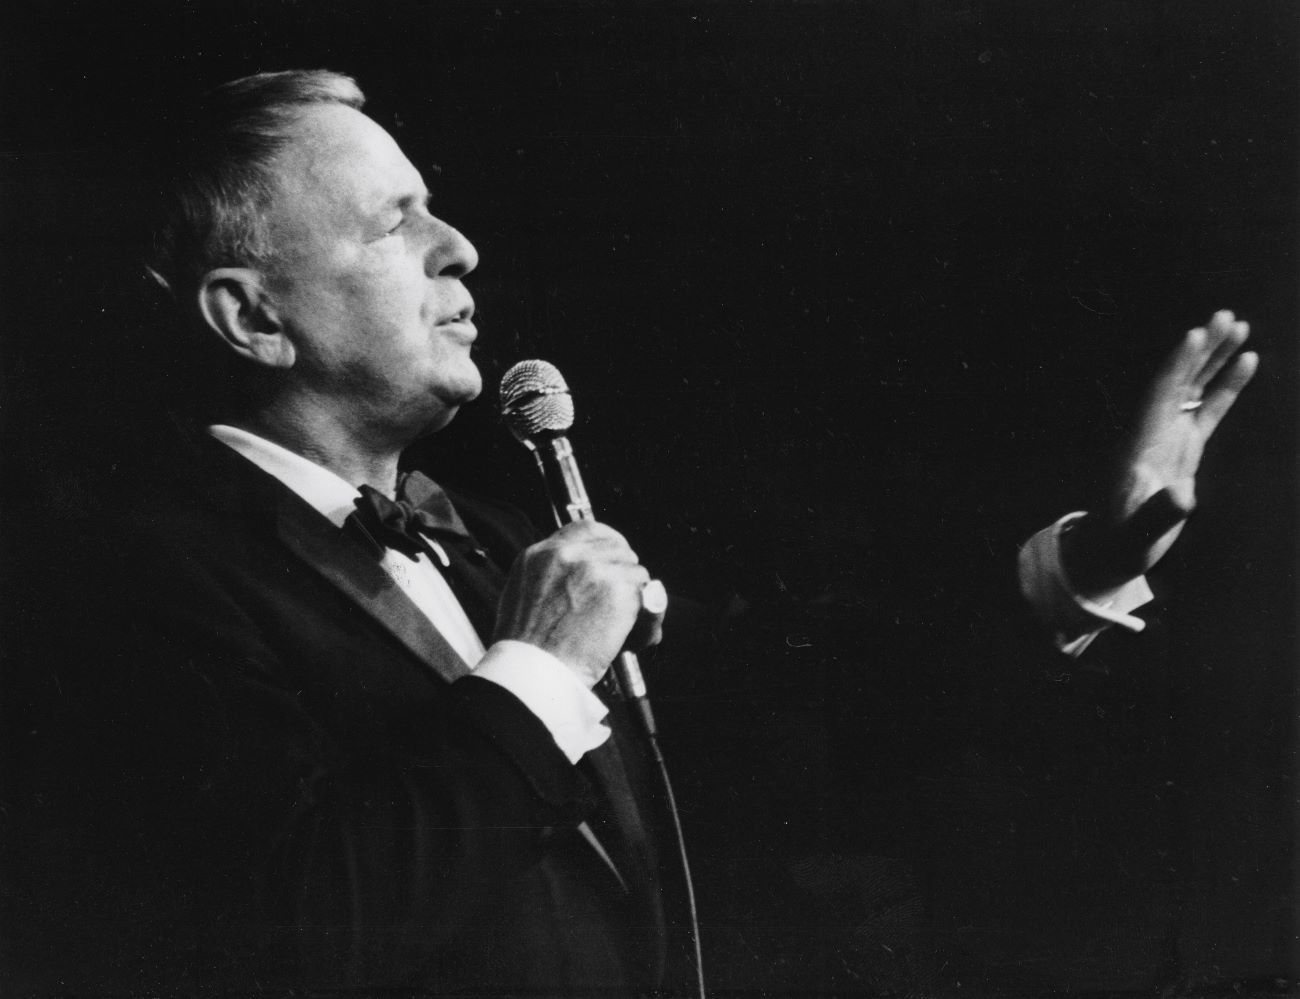 Фрэнк концерт. Фрэнк Синатра концерт. Фрэнк Синатра поет. Frank Sinatra на сцене.